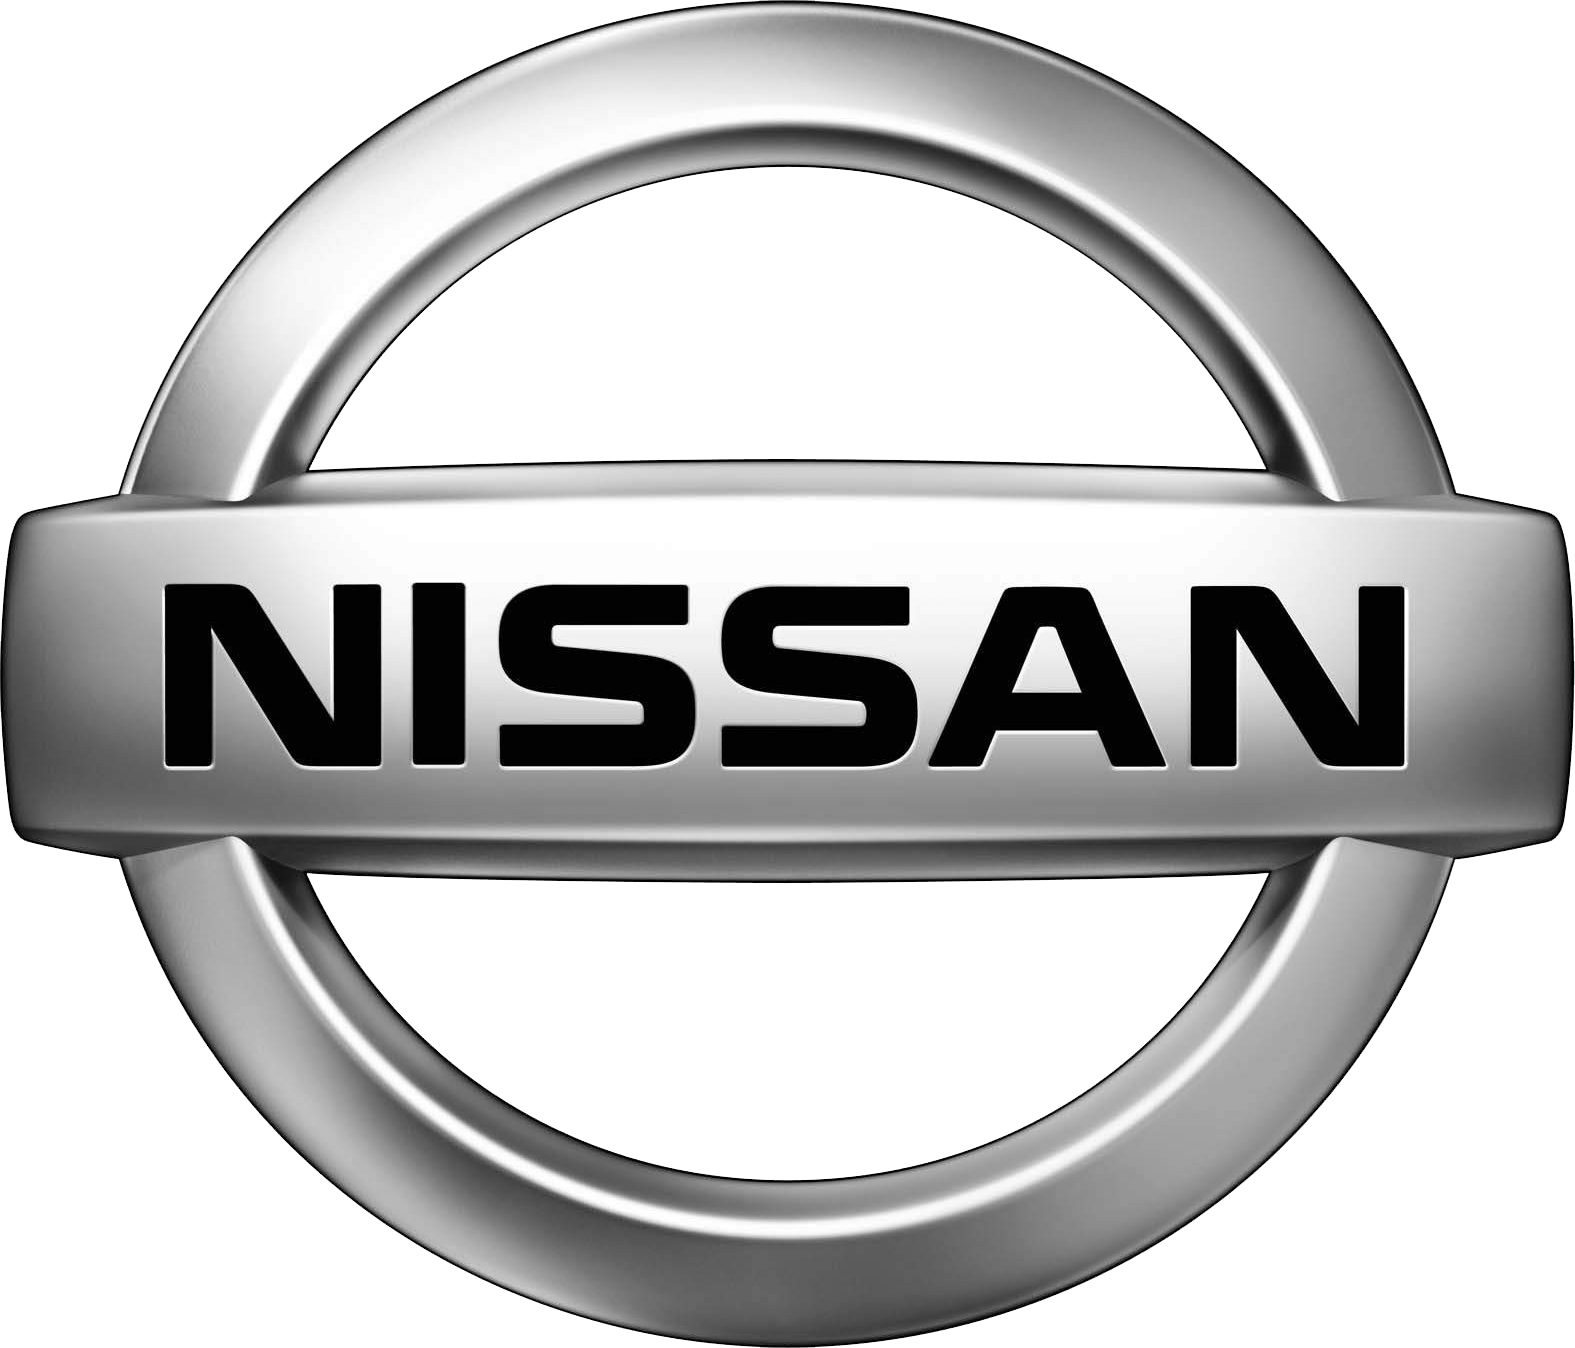 Nissan car logo PNG brand image - Nissan PNG, Nissan HD PNG - Free PNG